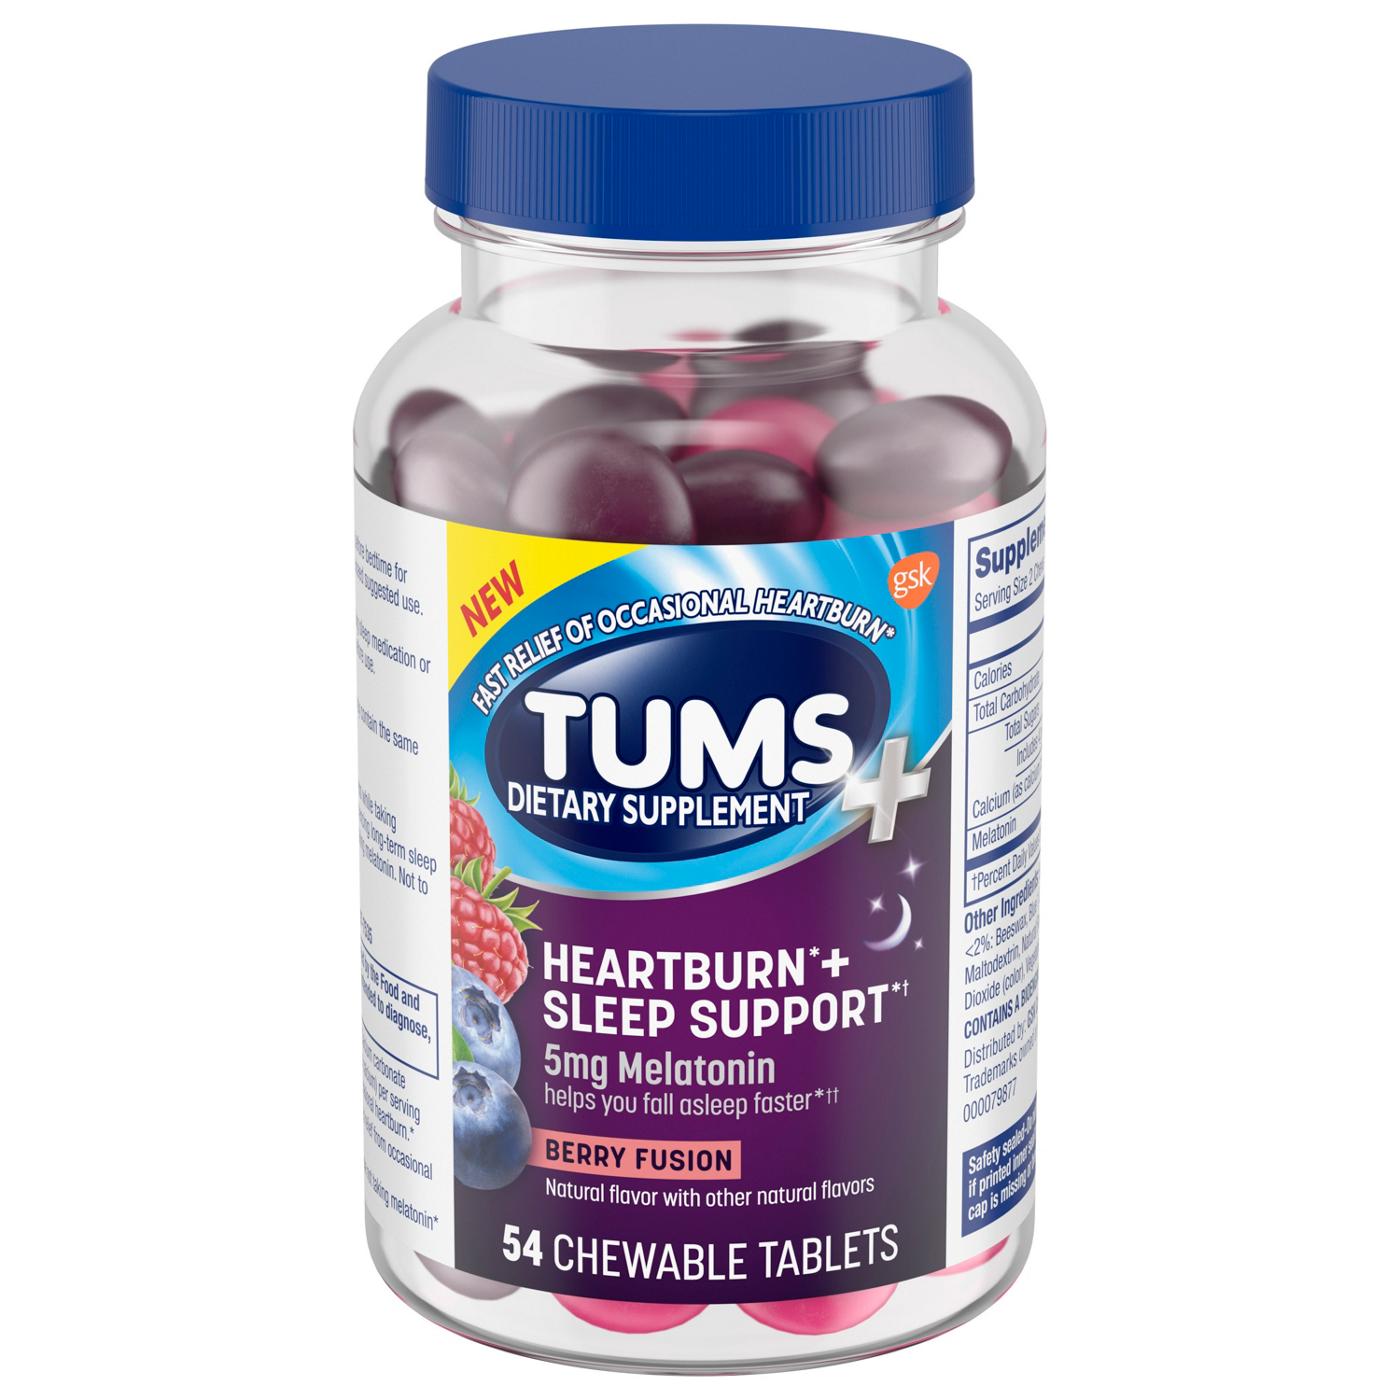 Tums Plus Heartburn + Sleep Support - Berry Fusion